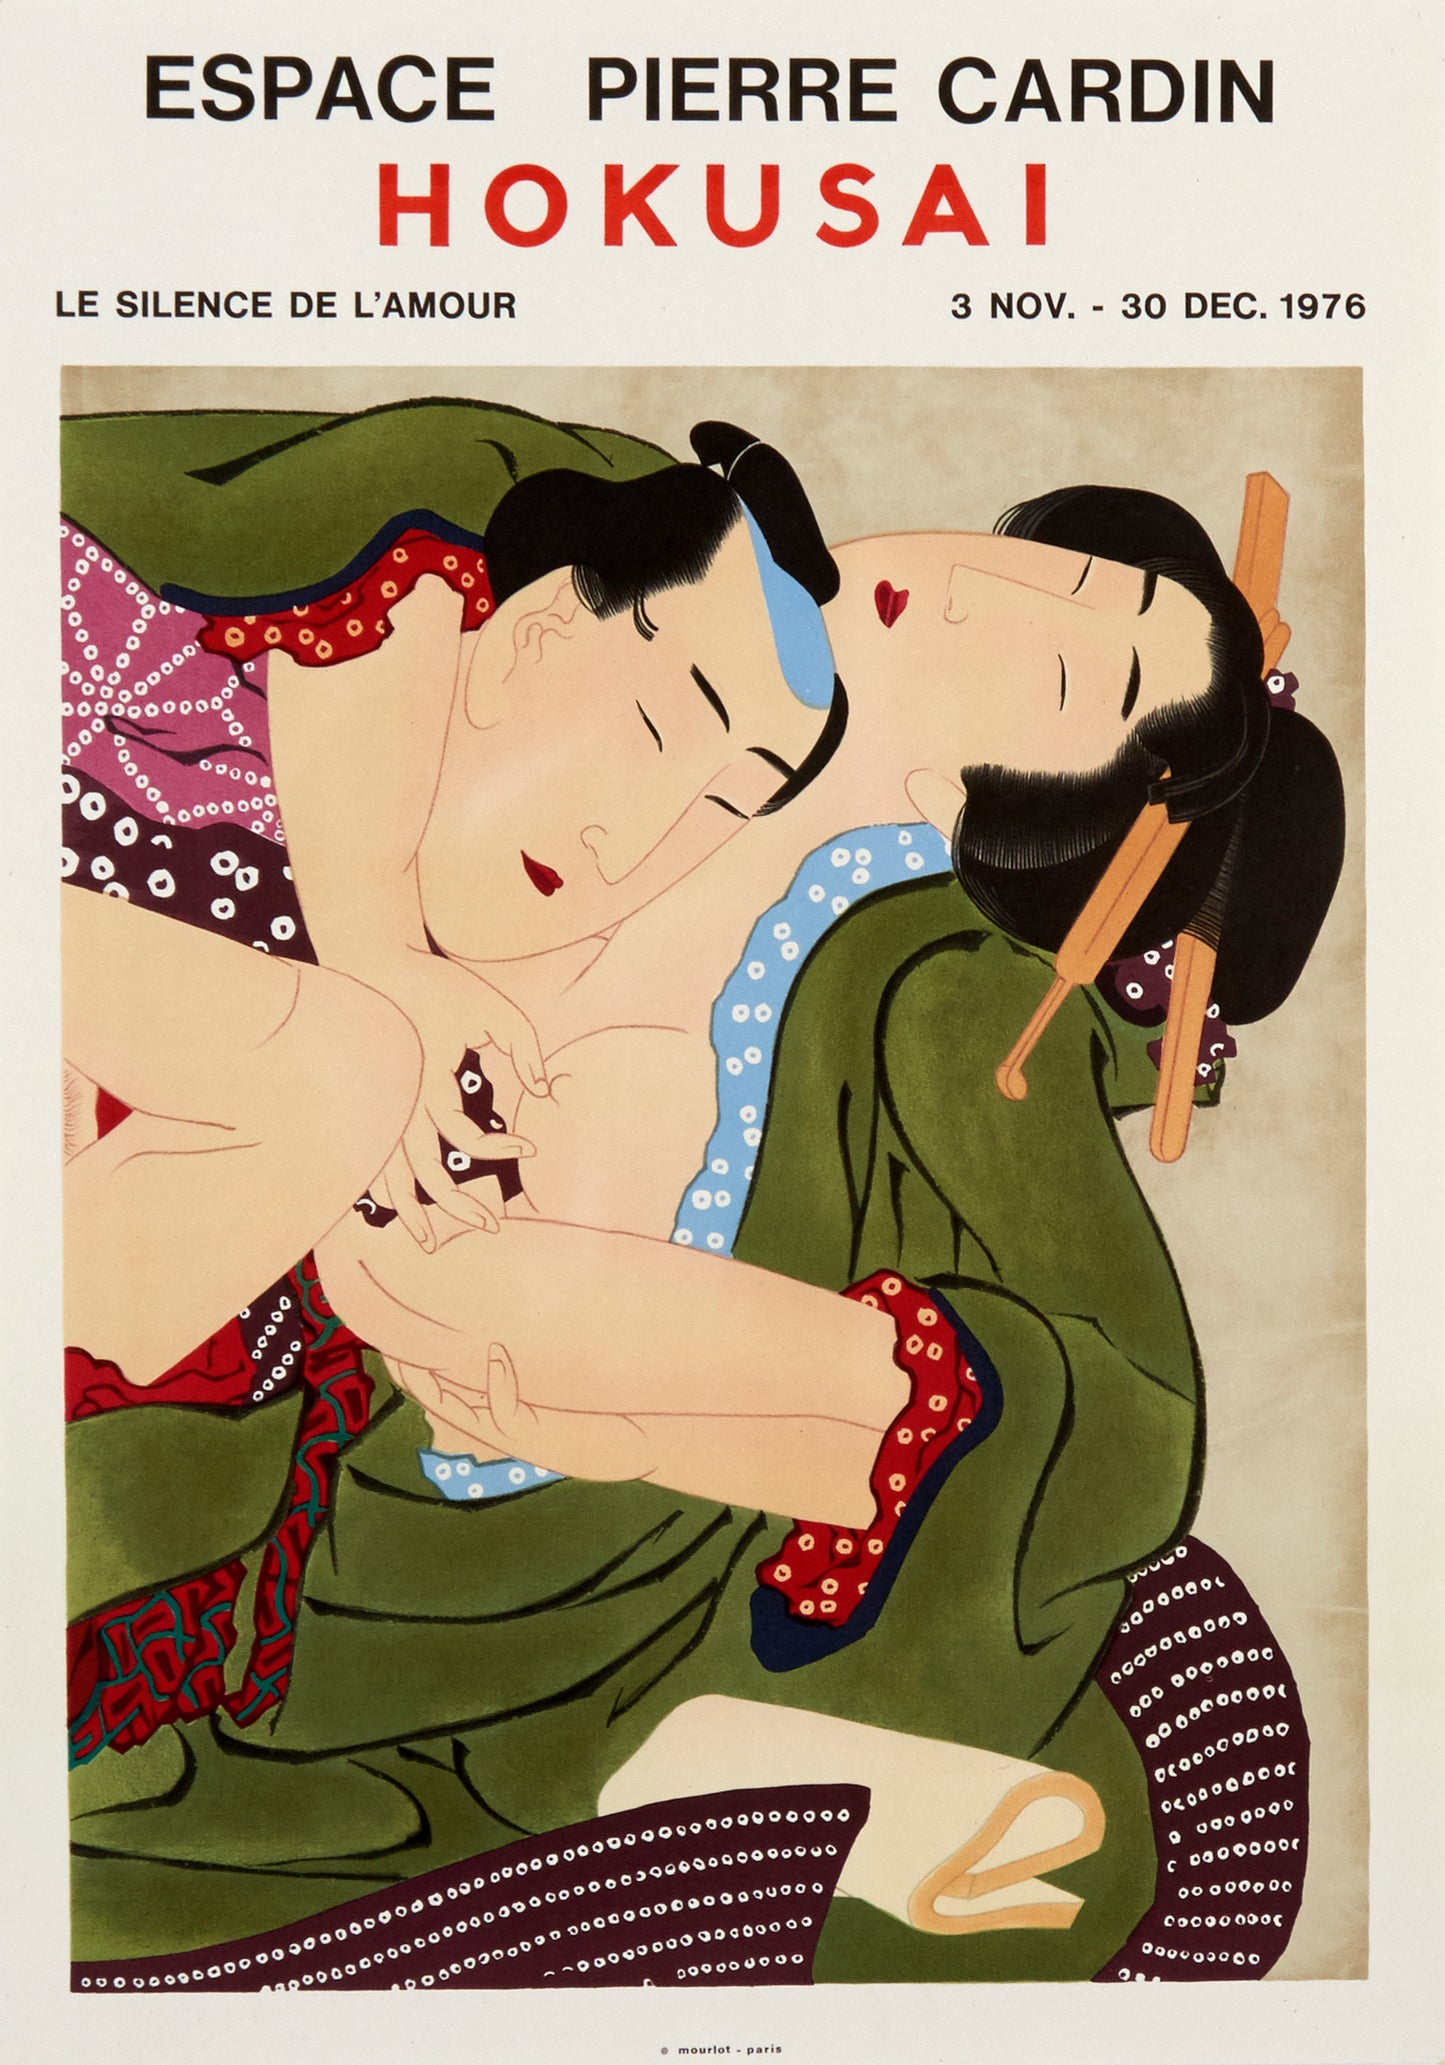 Hokusai - Espace Pierre Cardin by Katsushika Hokusai, 1976 - Mourlot Editions - Fine_Art - Poster - Lithograph - Wall Art - Vintage - Prints - Original